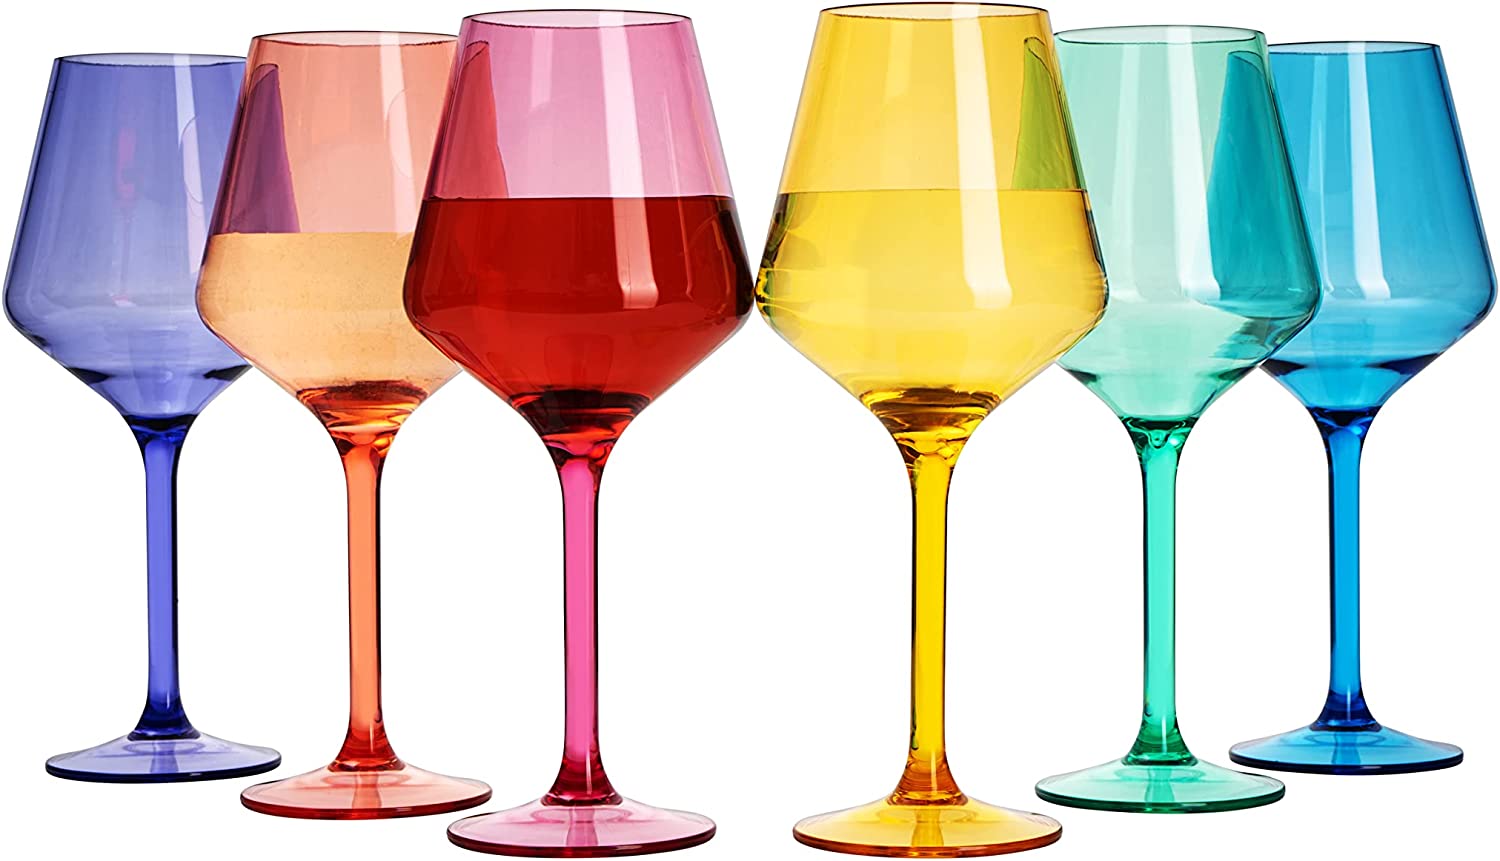 Color Unbreakable Elegant Acrylic Plastic Stemless Wine Glasses 15 oz | Set  of 6 | European Style 10…See more Color Unbreakable Elegant Acrylic